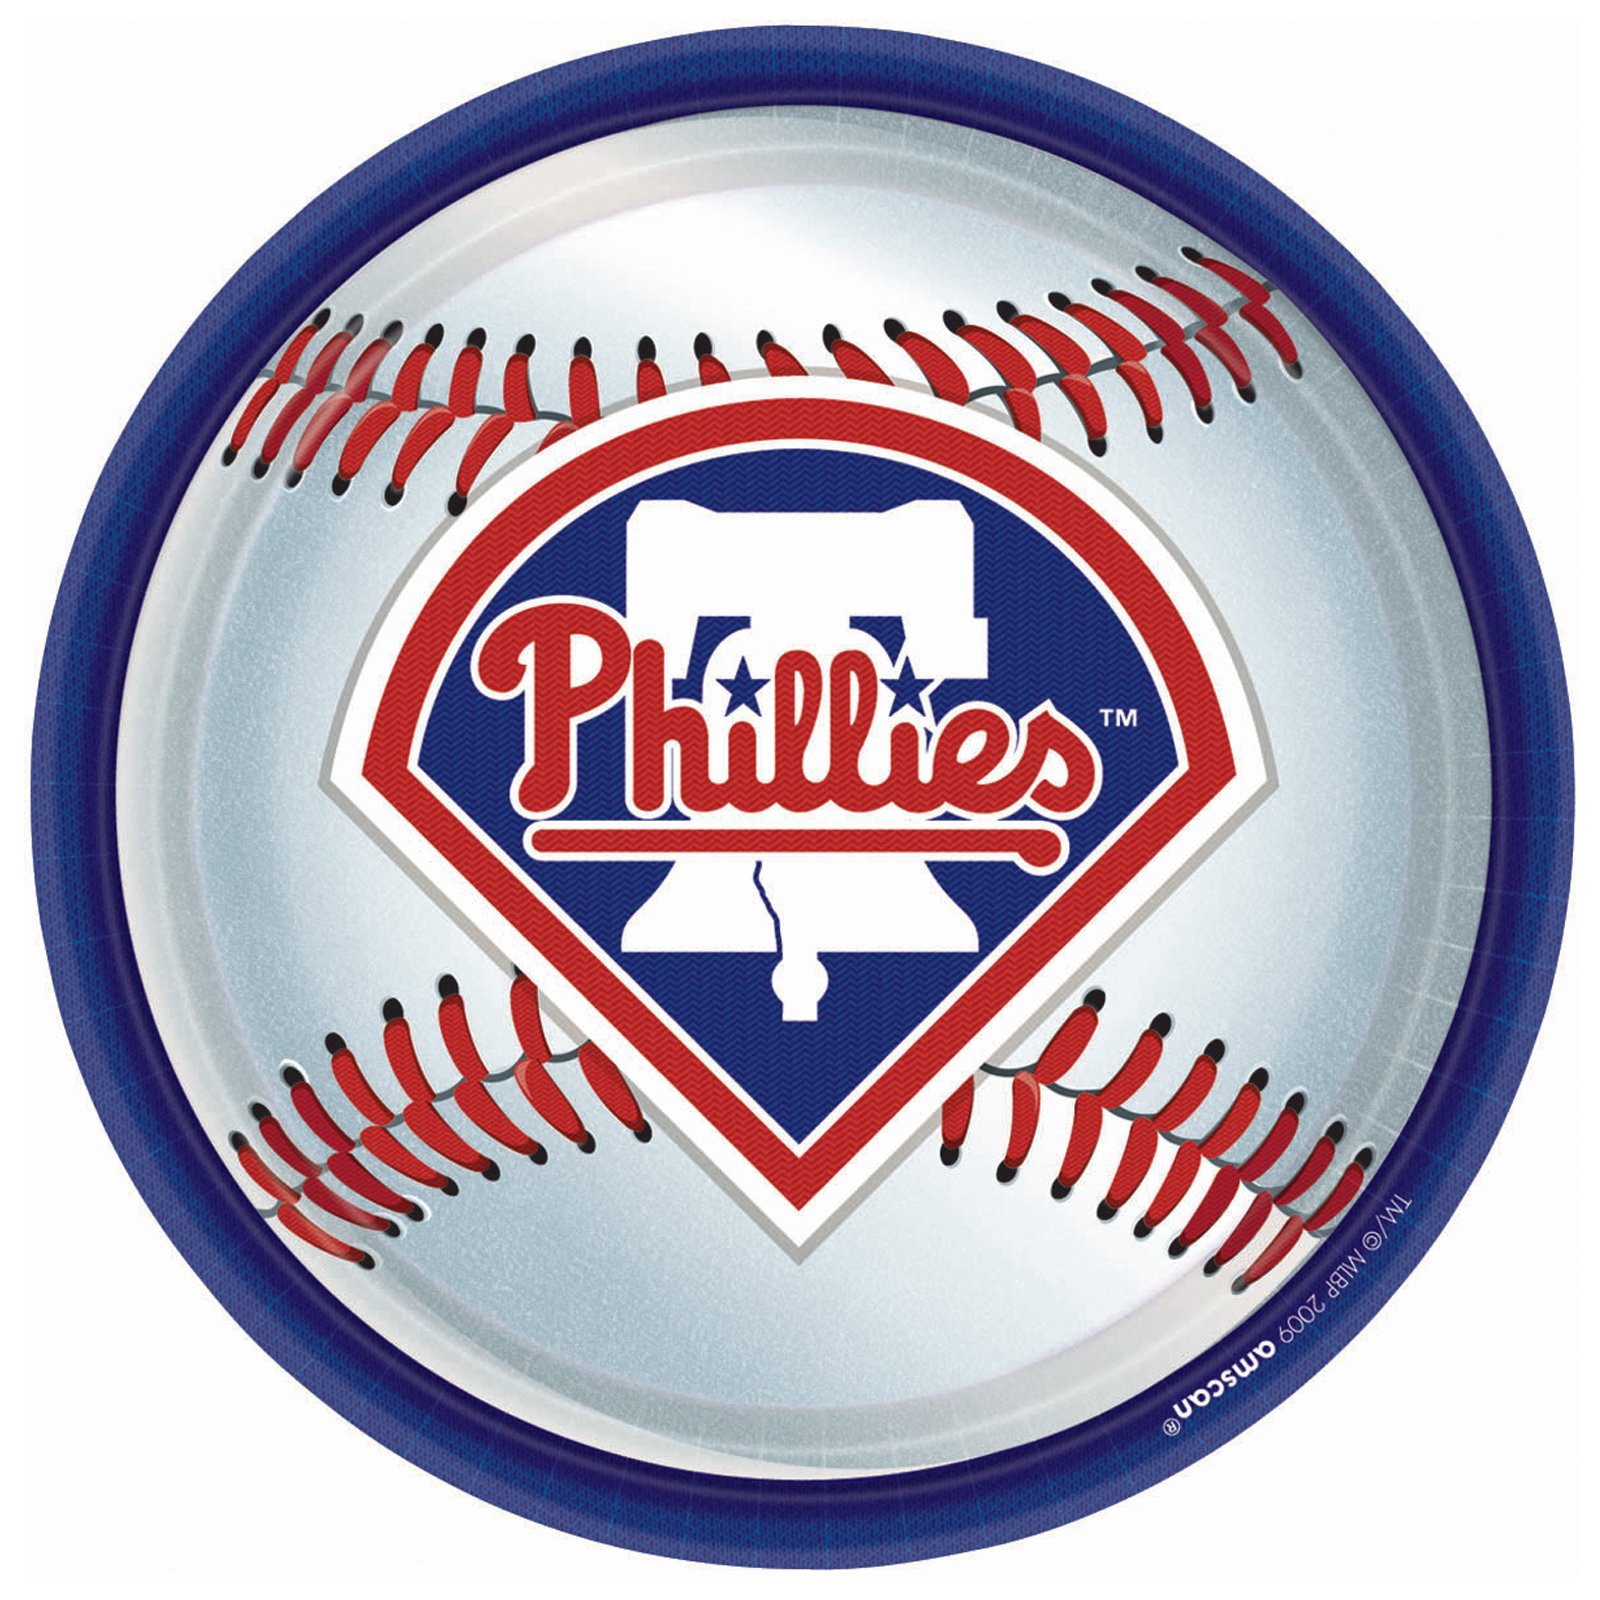 Free Phillies Logo, Download Free Phillies Logo png images, Free